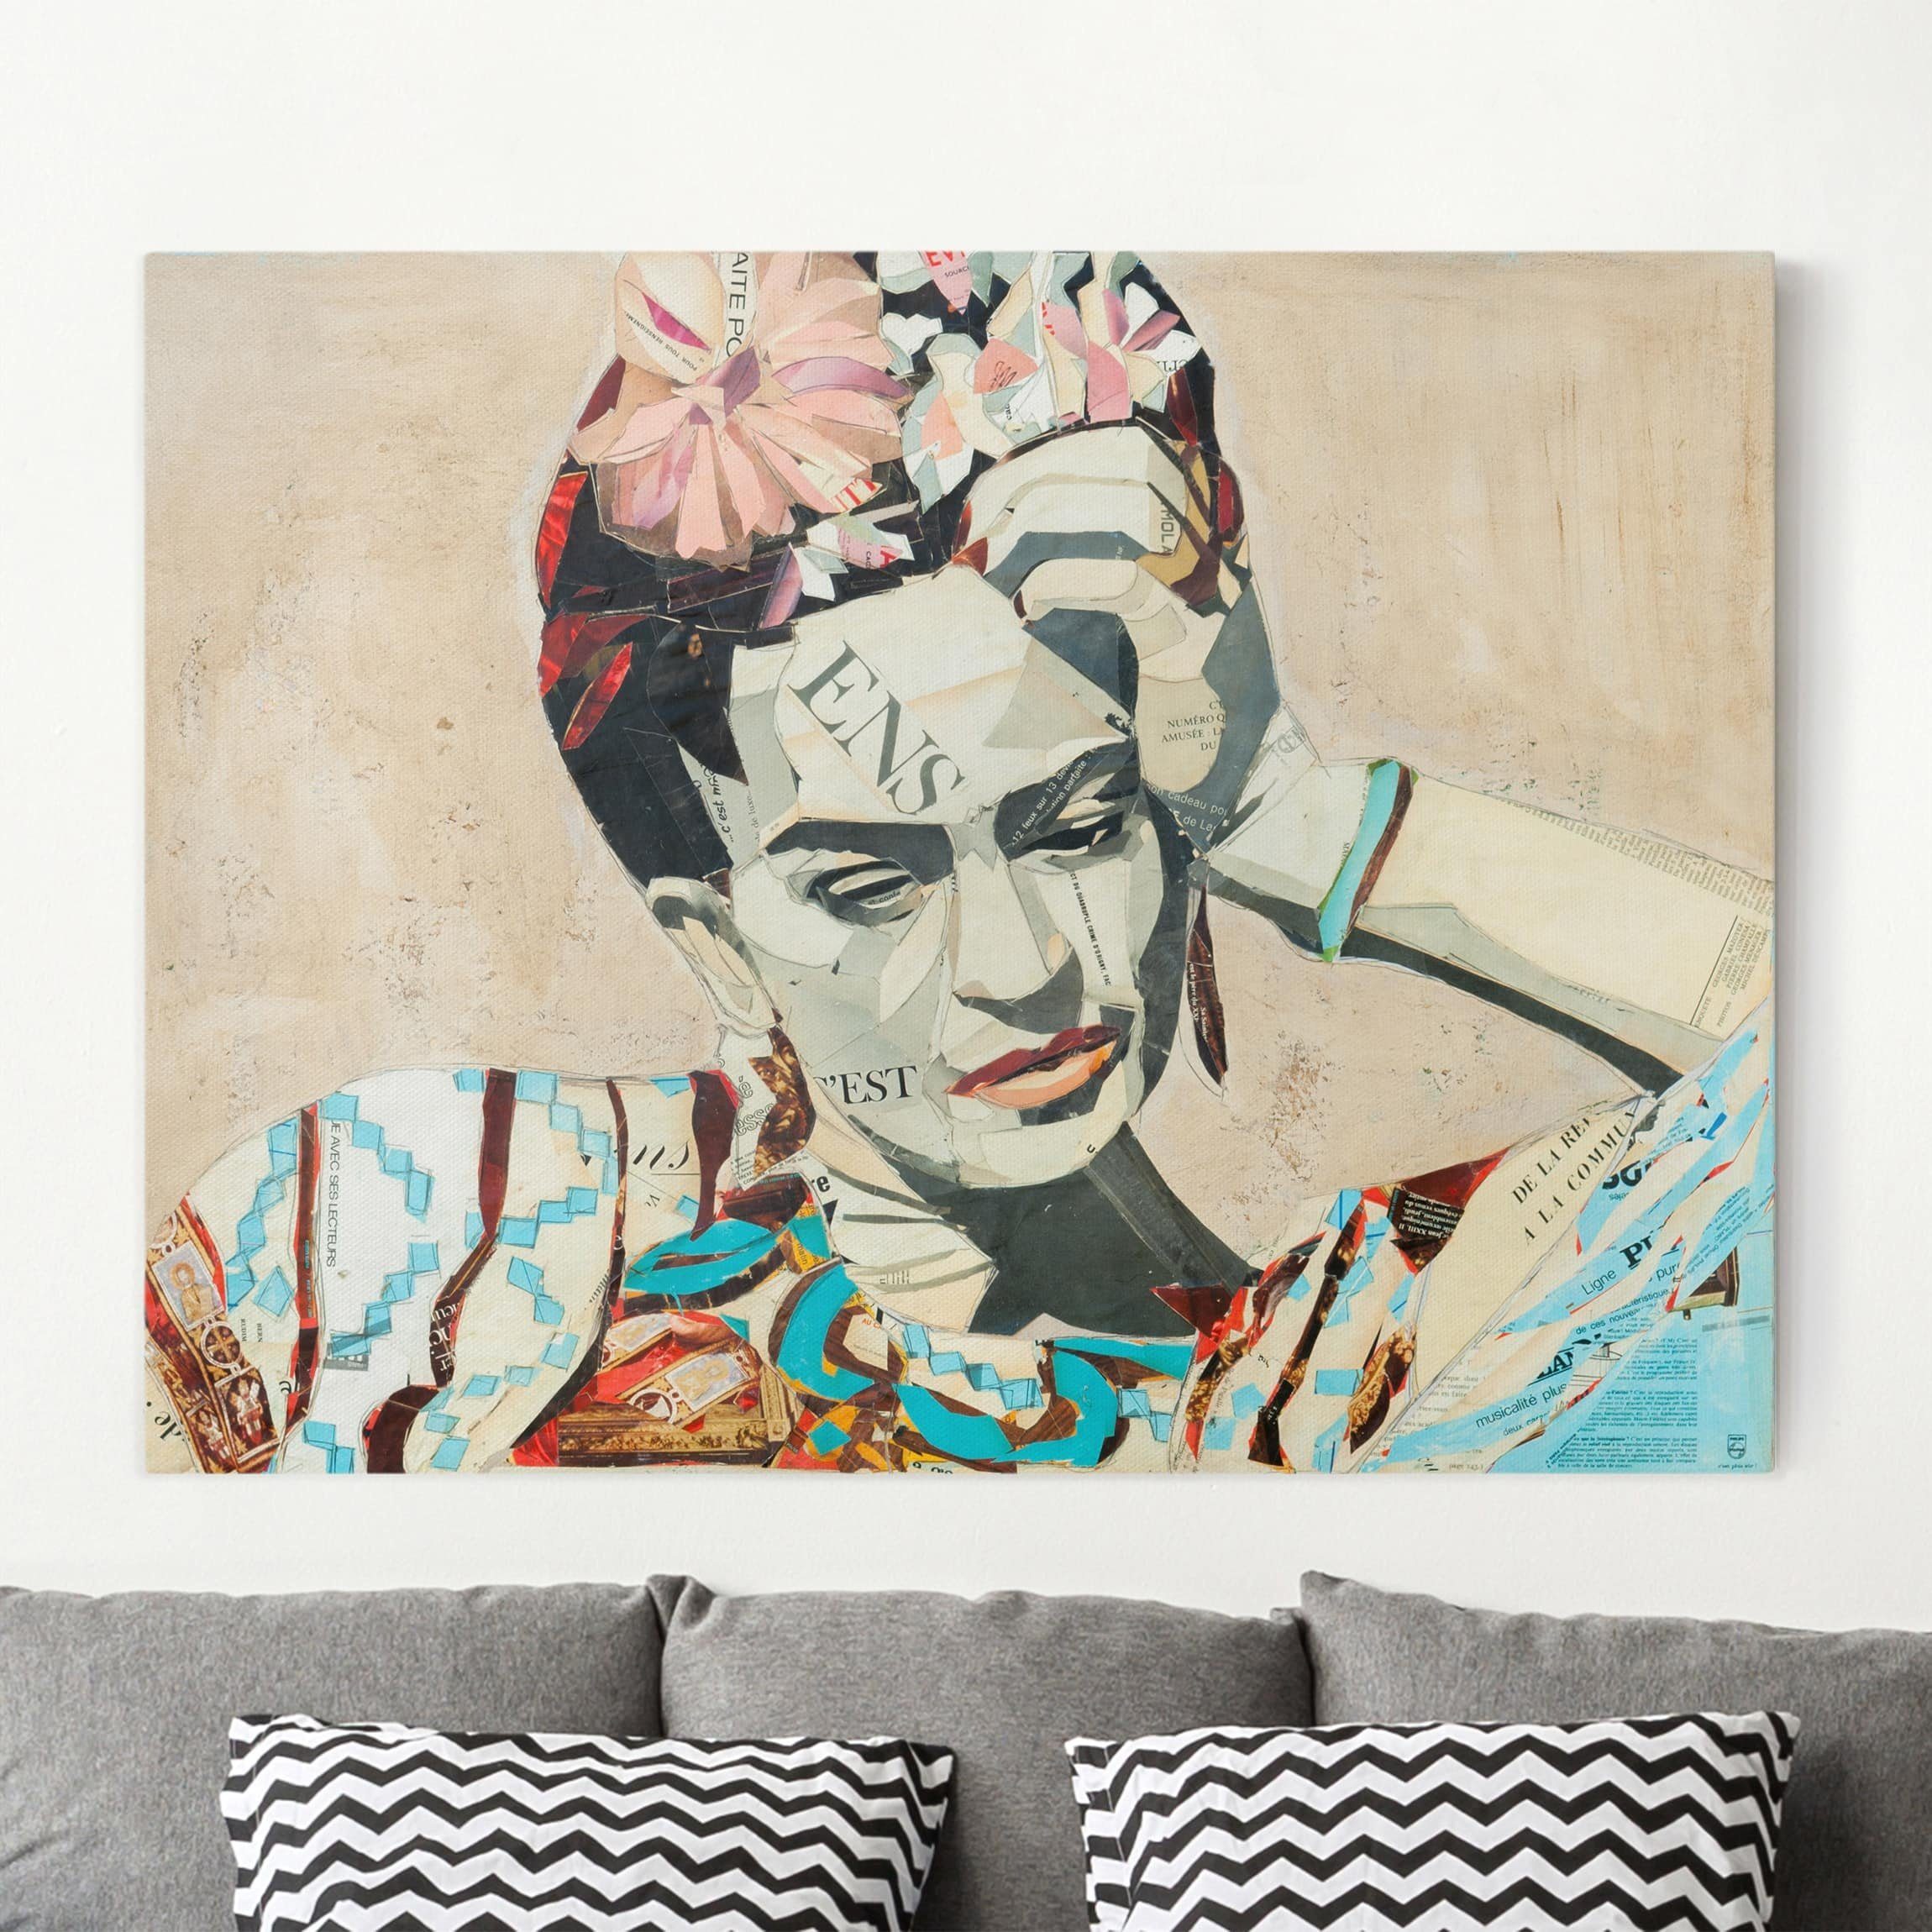 Bilderdepot24 Leinwandbild Kunstdruck Modern Malerei Frida Kahlo beige Bild auf Leinwand XXL, Bild auf Leinwand; Leinwanddruck in vielen Größen